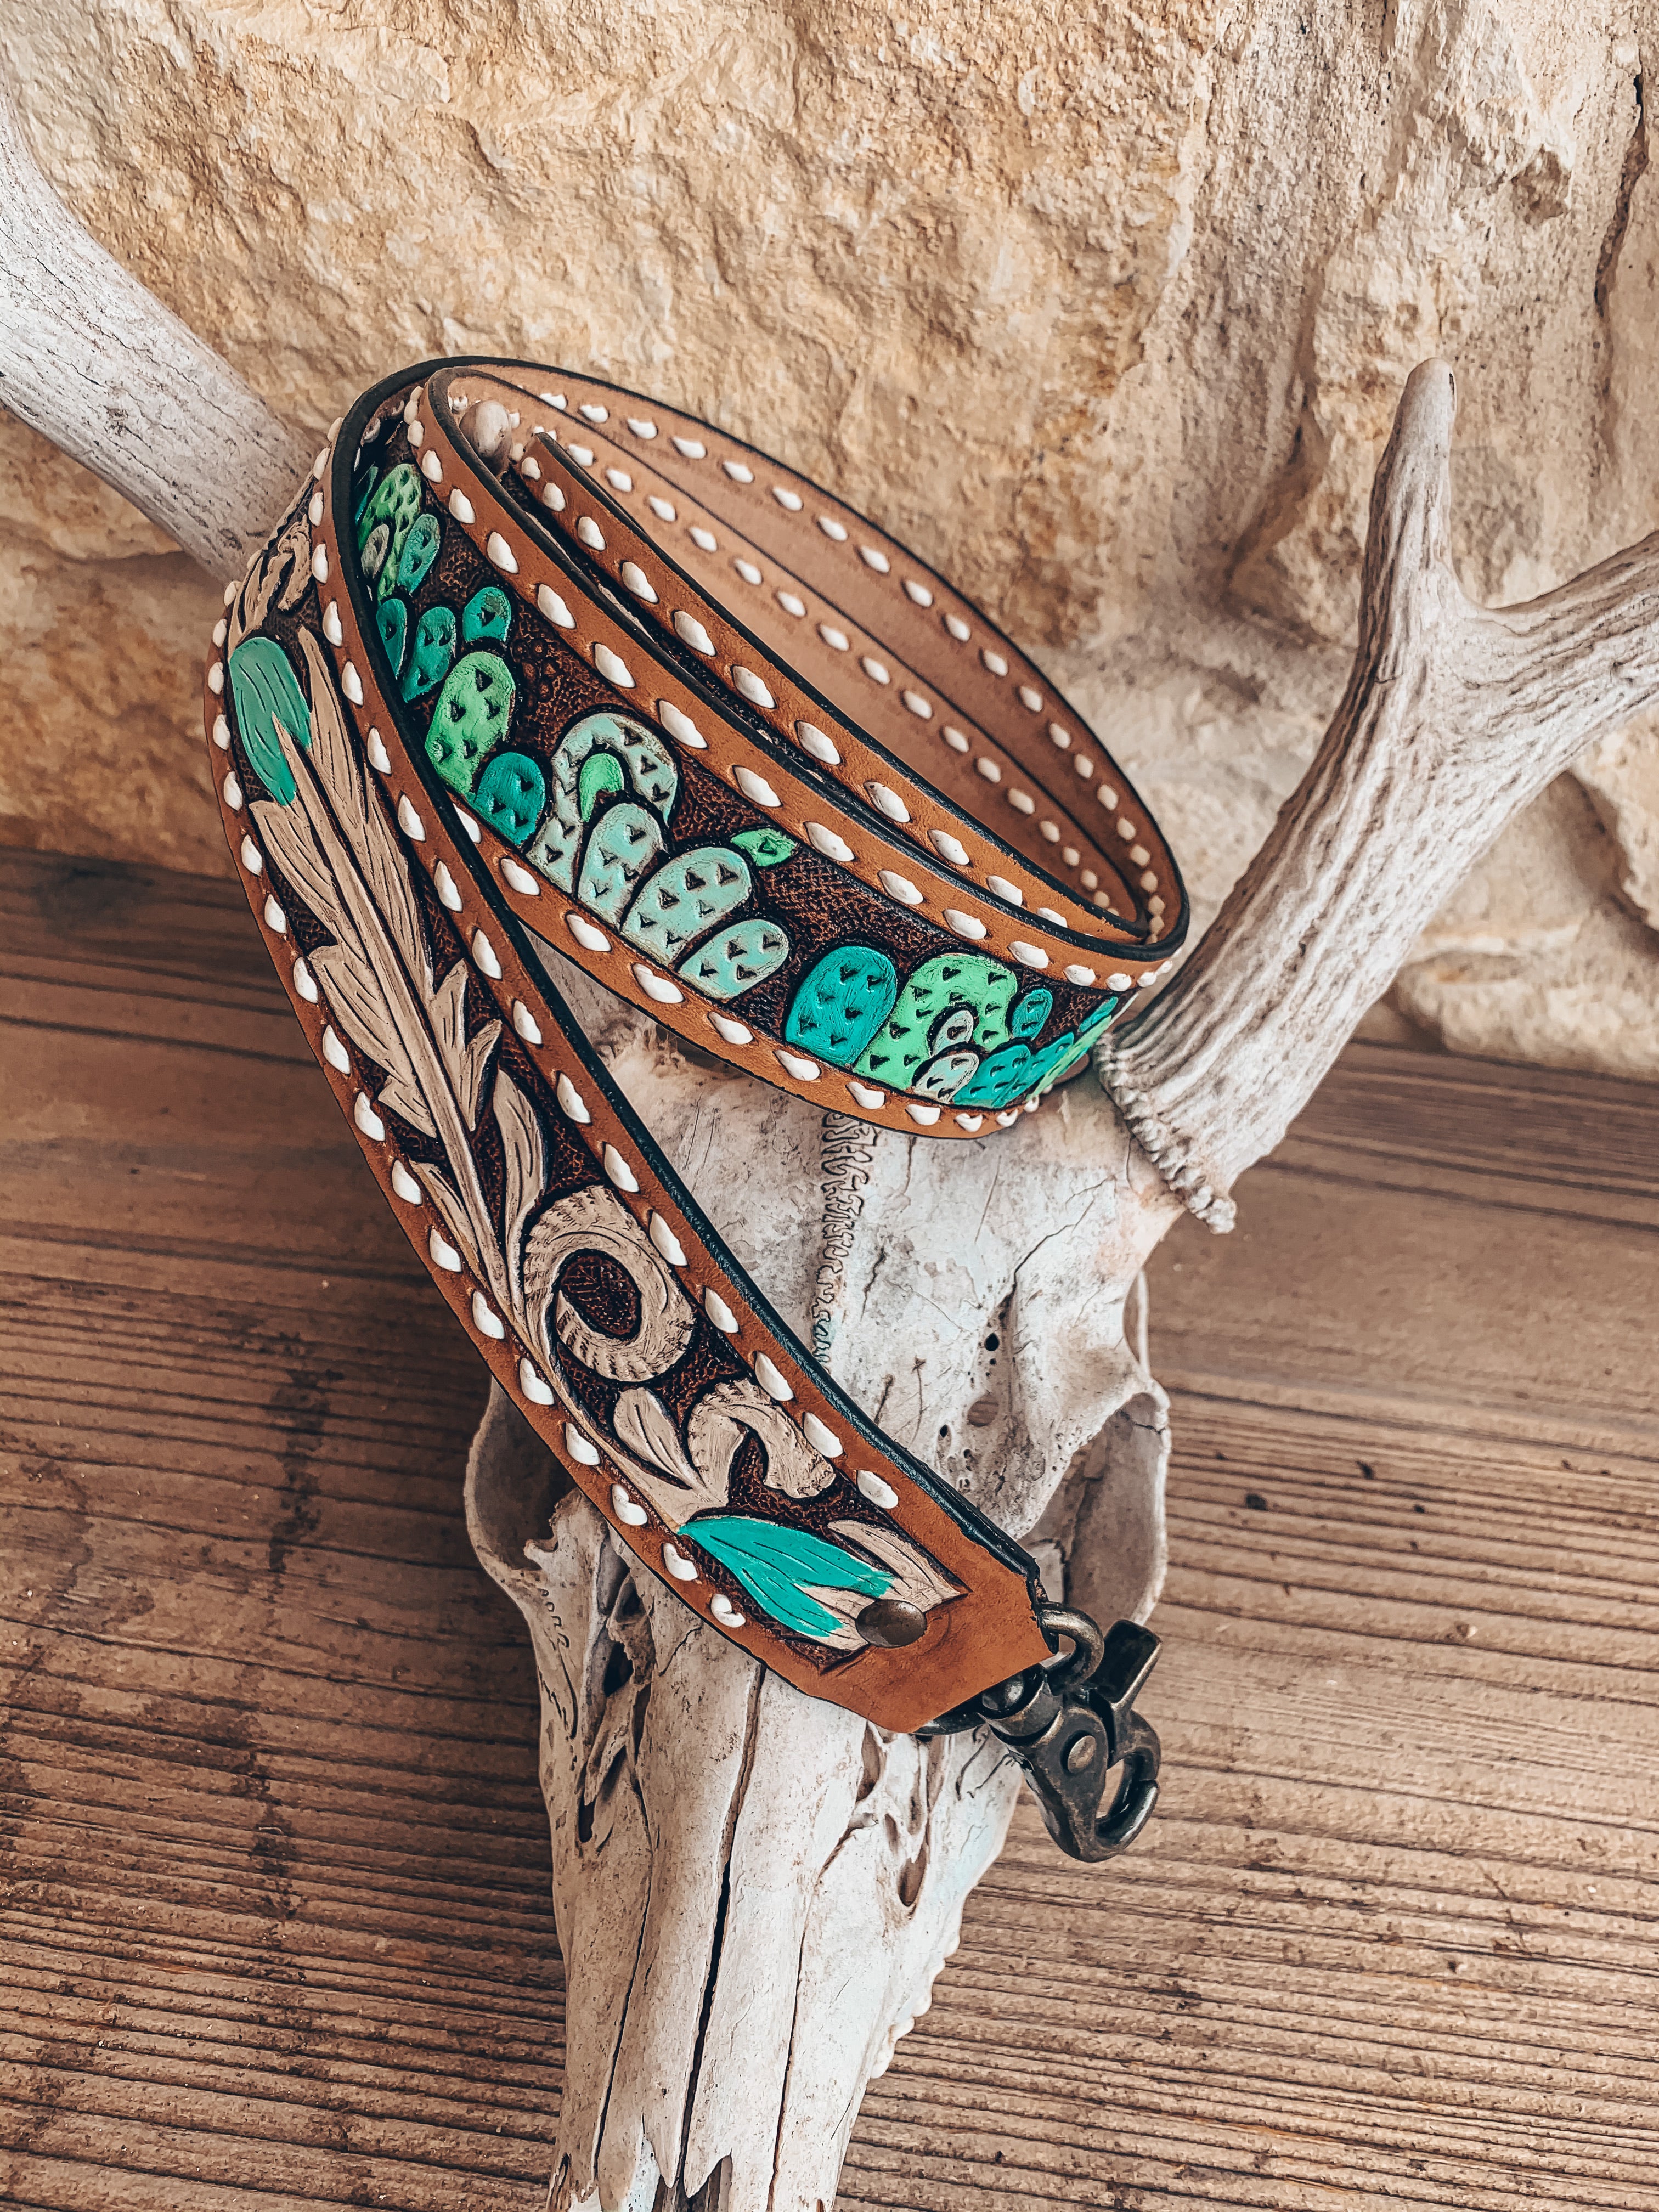 Native Instinct Feathers Tassel by New Vintage Handbags